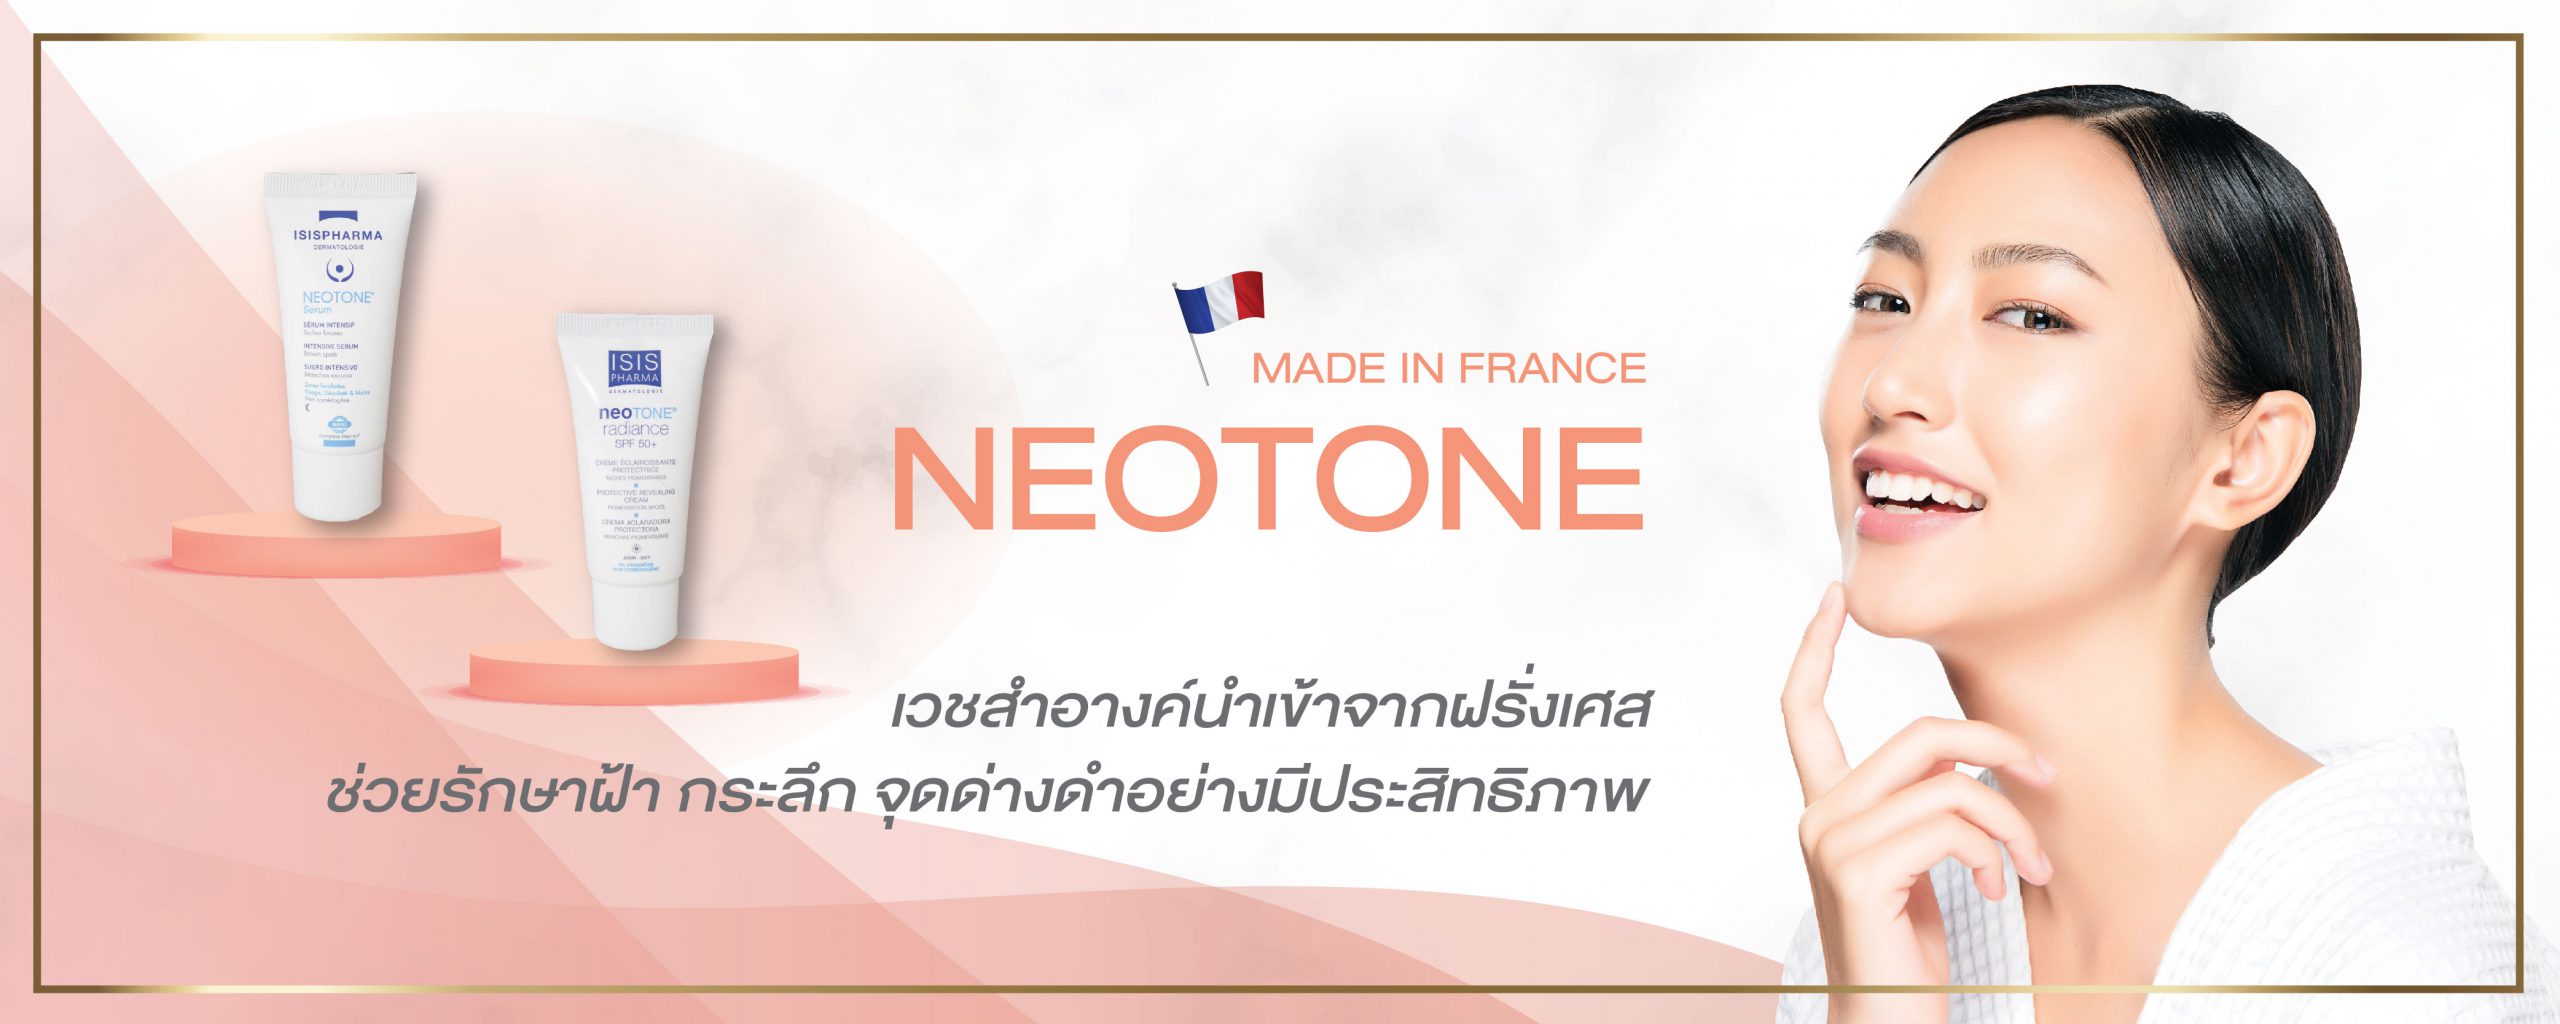 web_neotone_1000x400-01